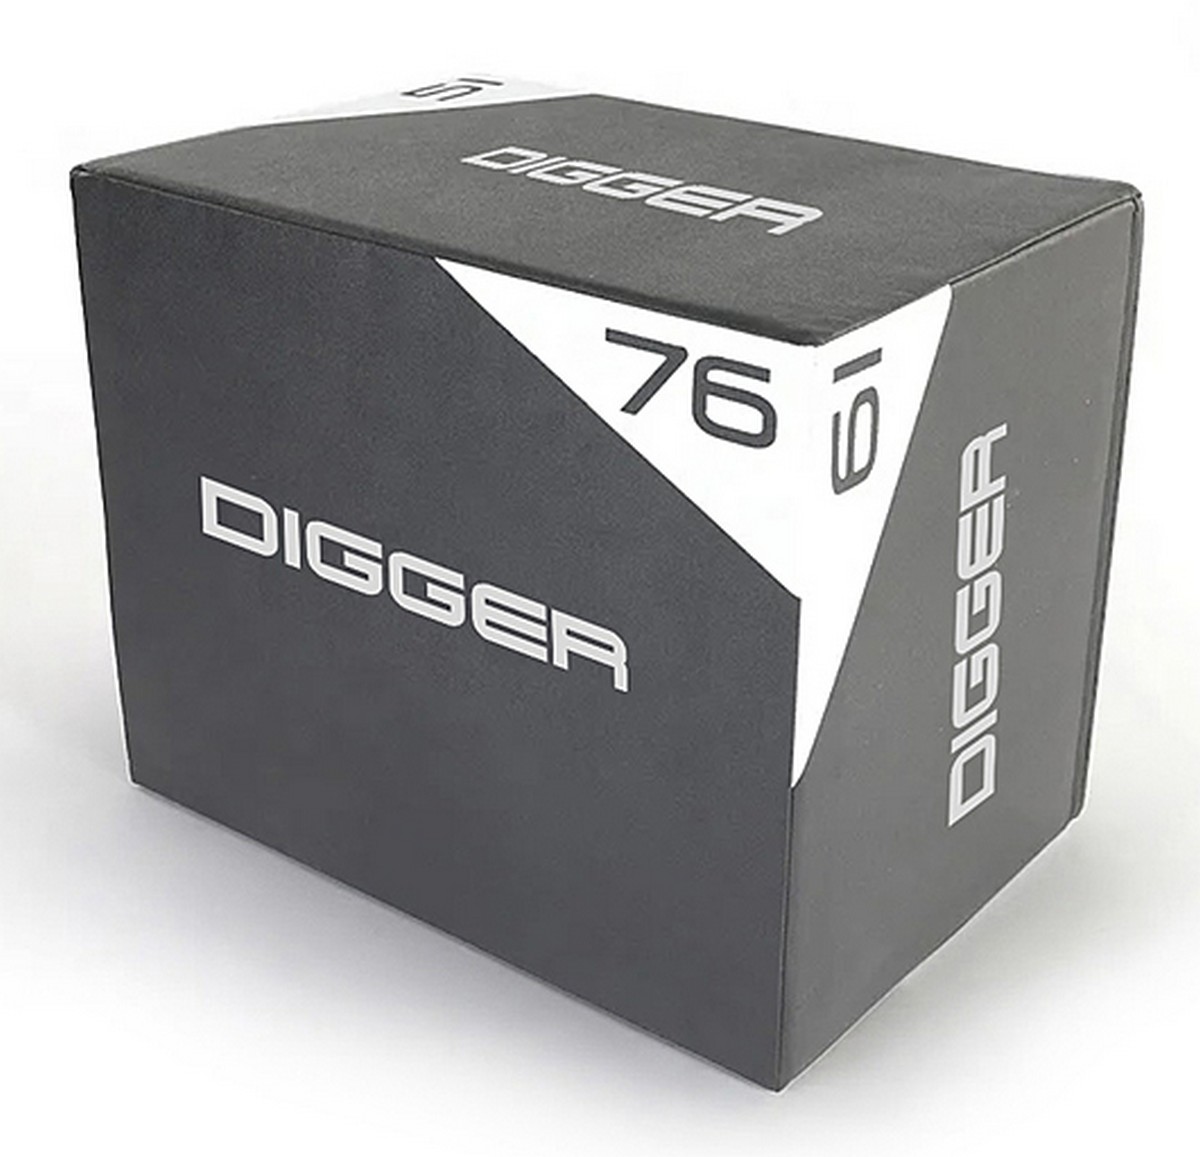   Hasttings Digger HD32G4